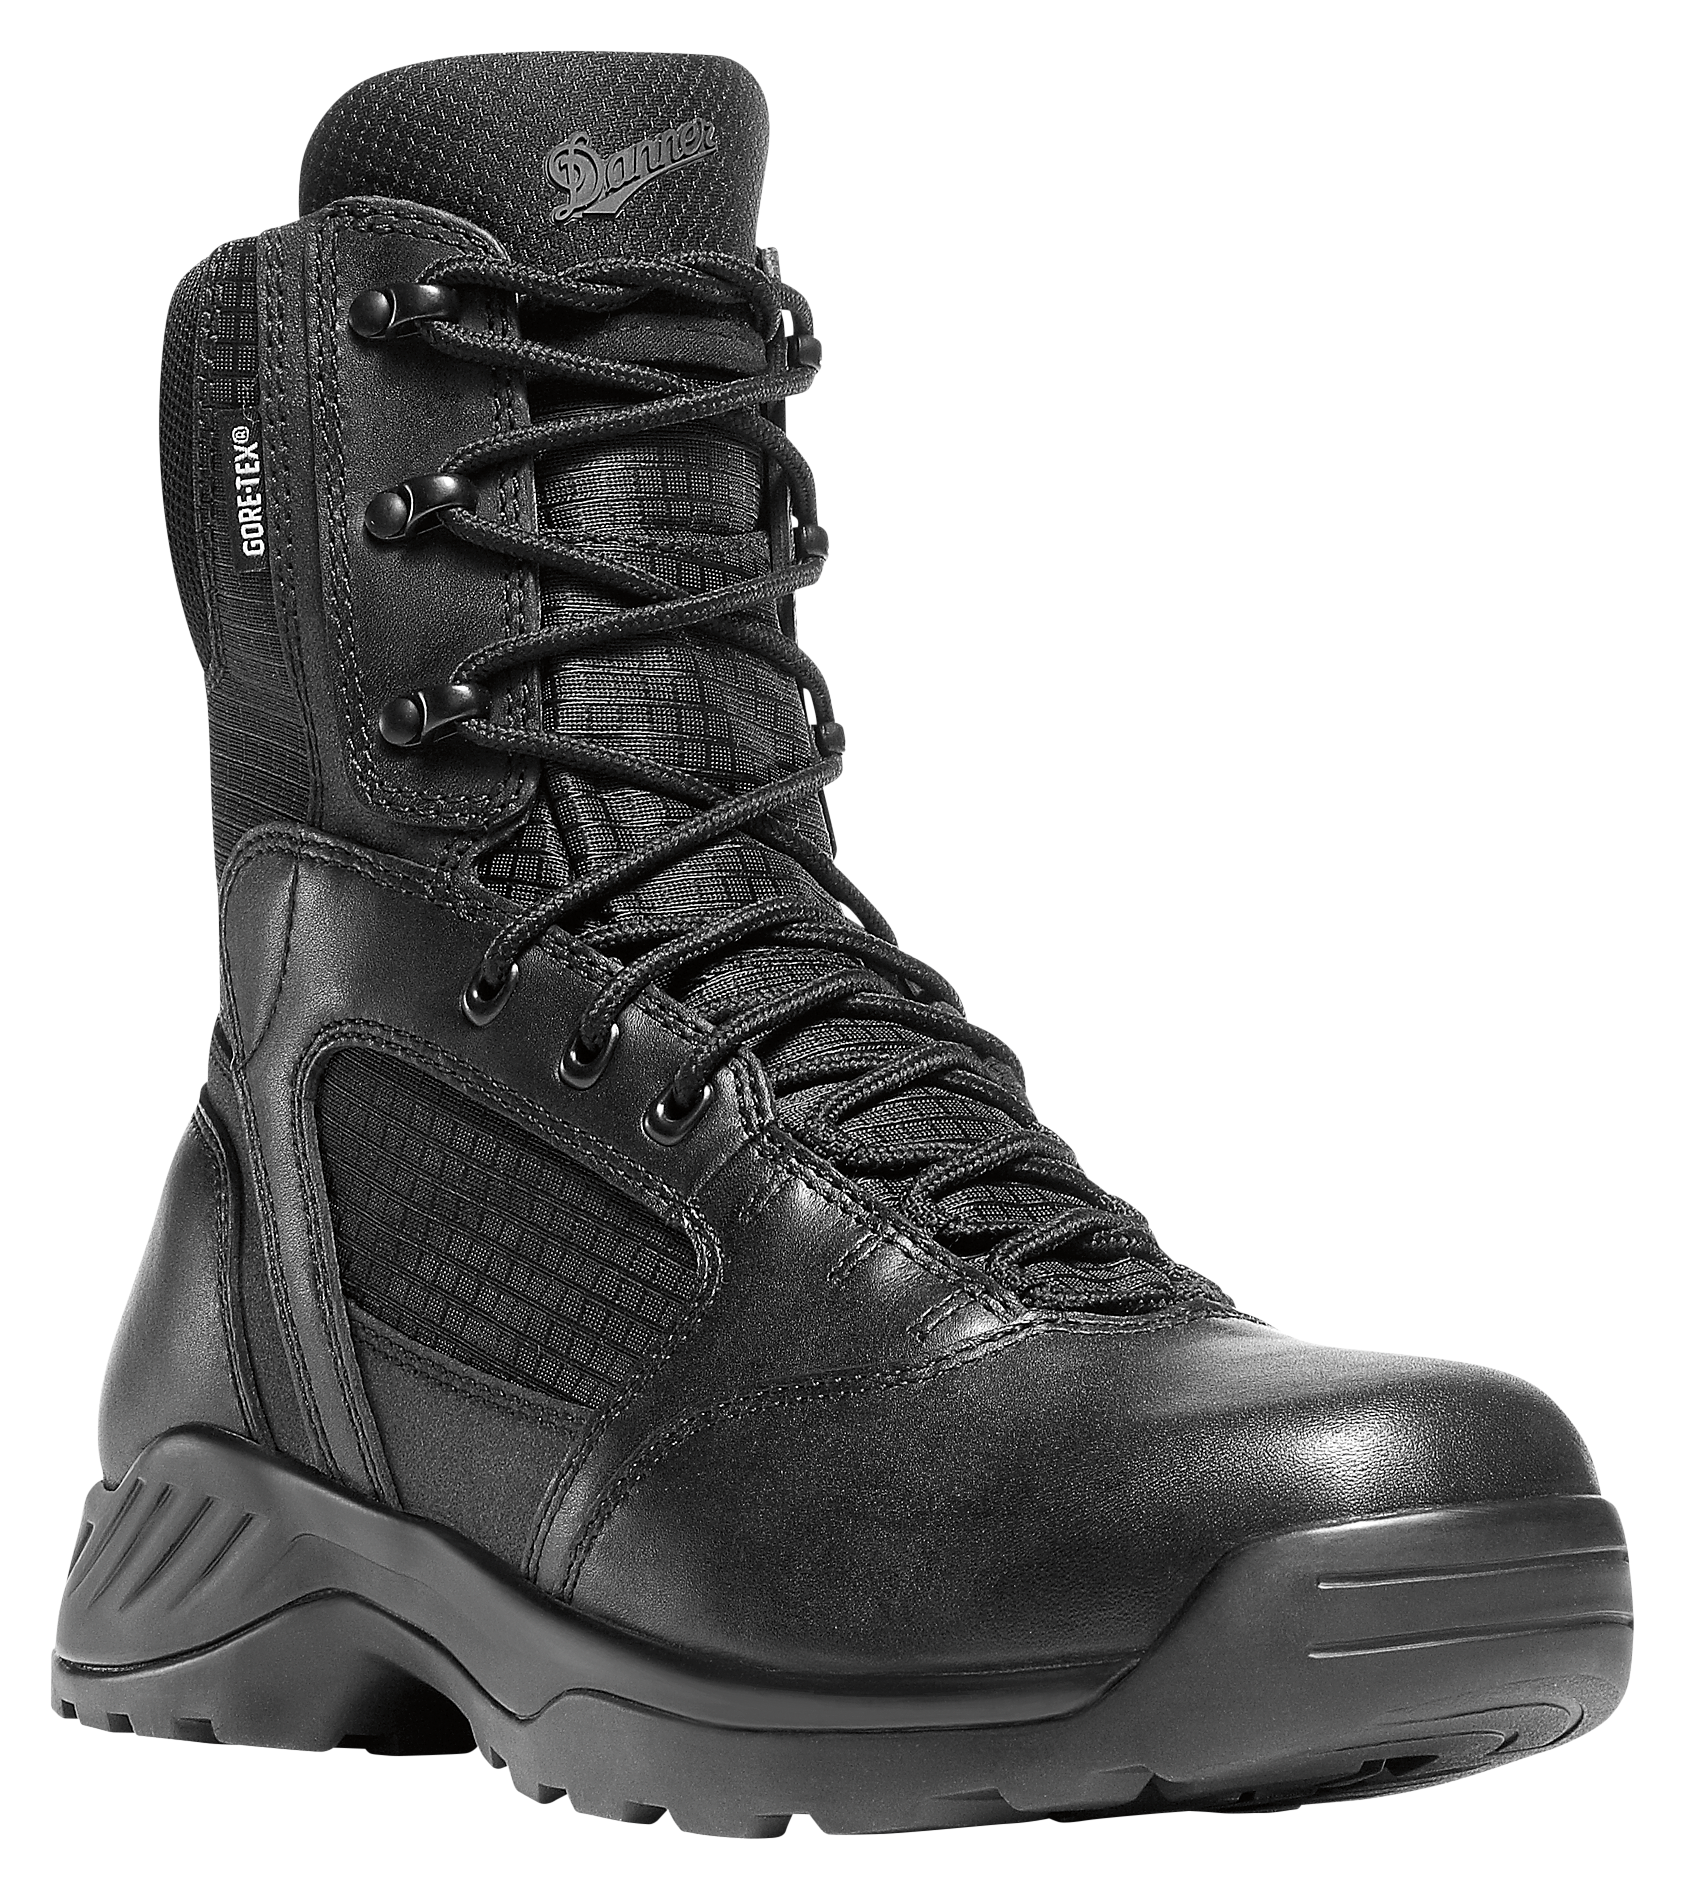 Danner Kinetic GTX Side-Zip Waterproof Tactical Duty Boots for Men - Black - 10.5W